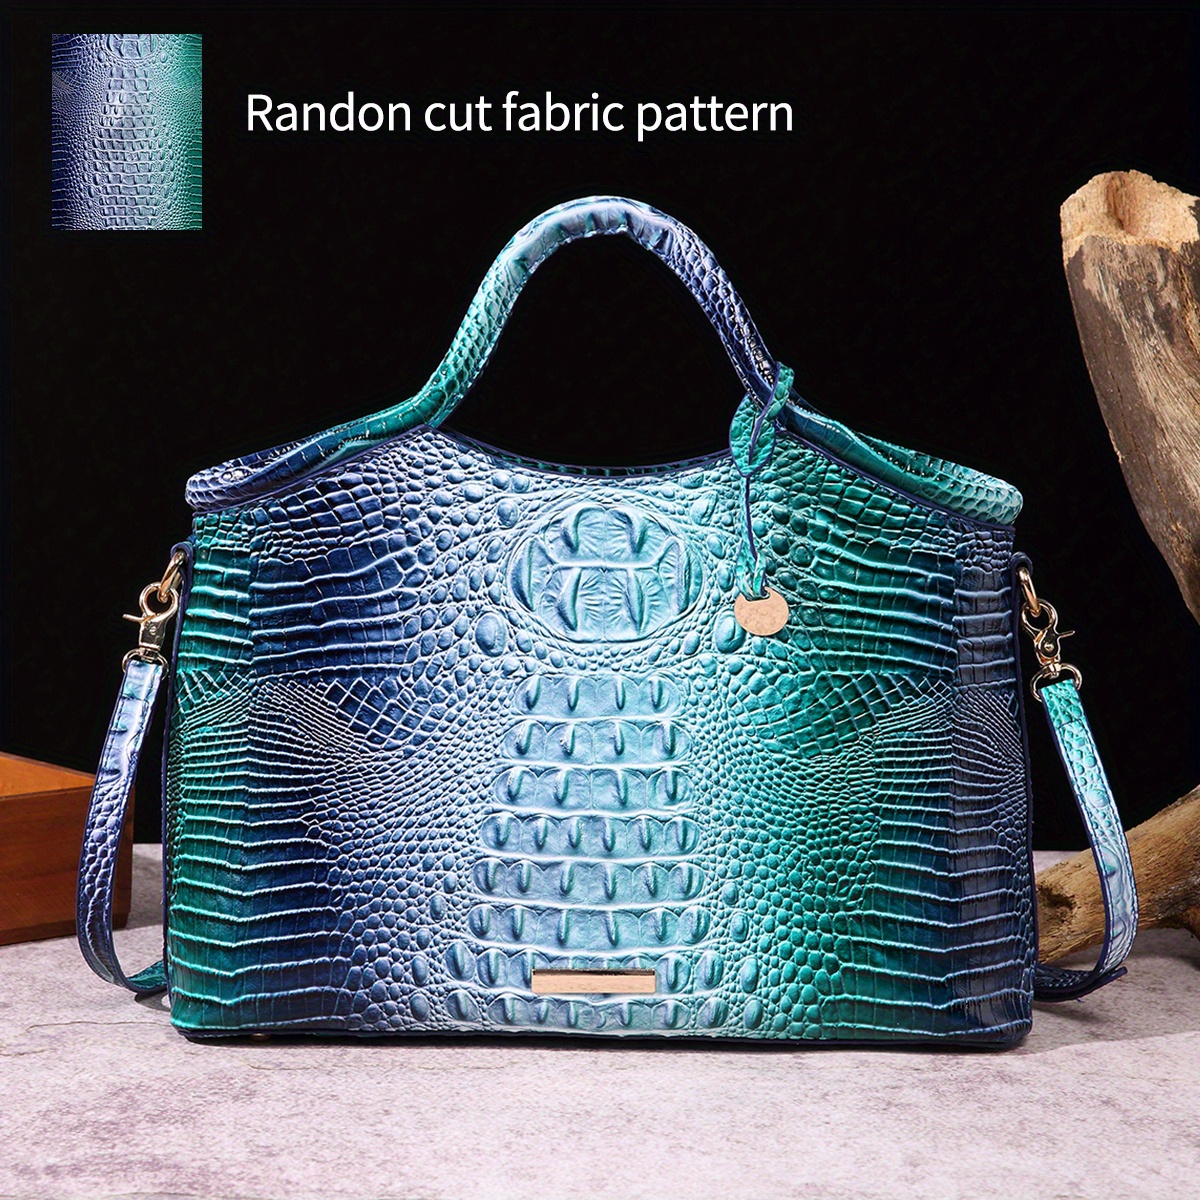 Brahmin Handbags - Our new Elaine Satchel is a vintage-inspired